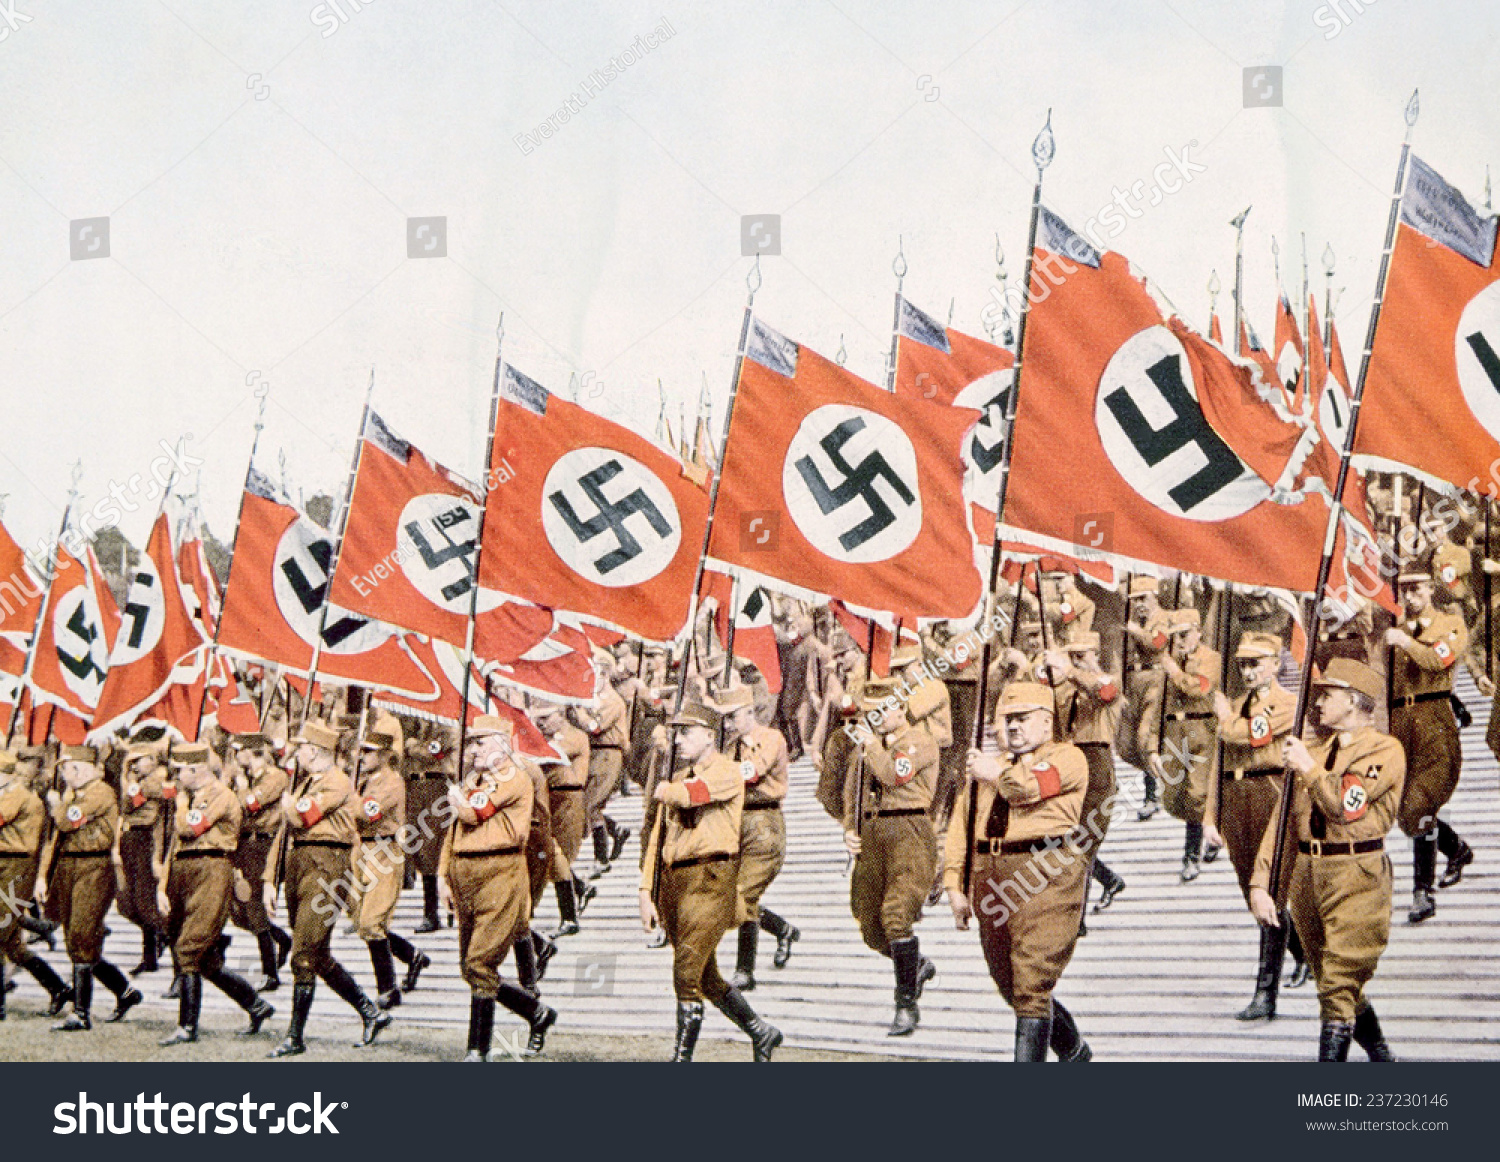 Nazi germany